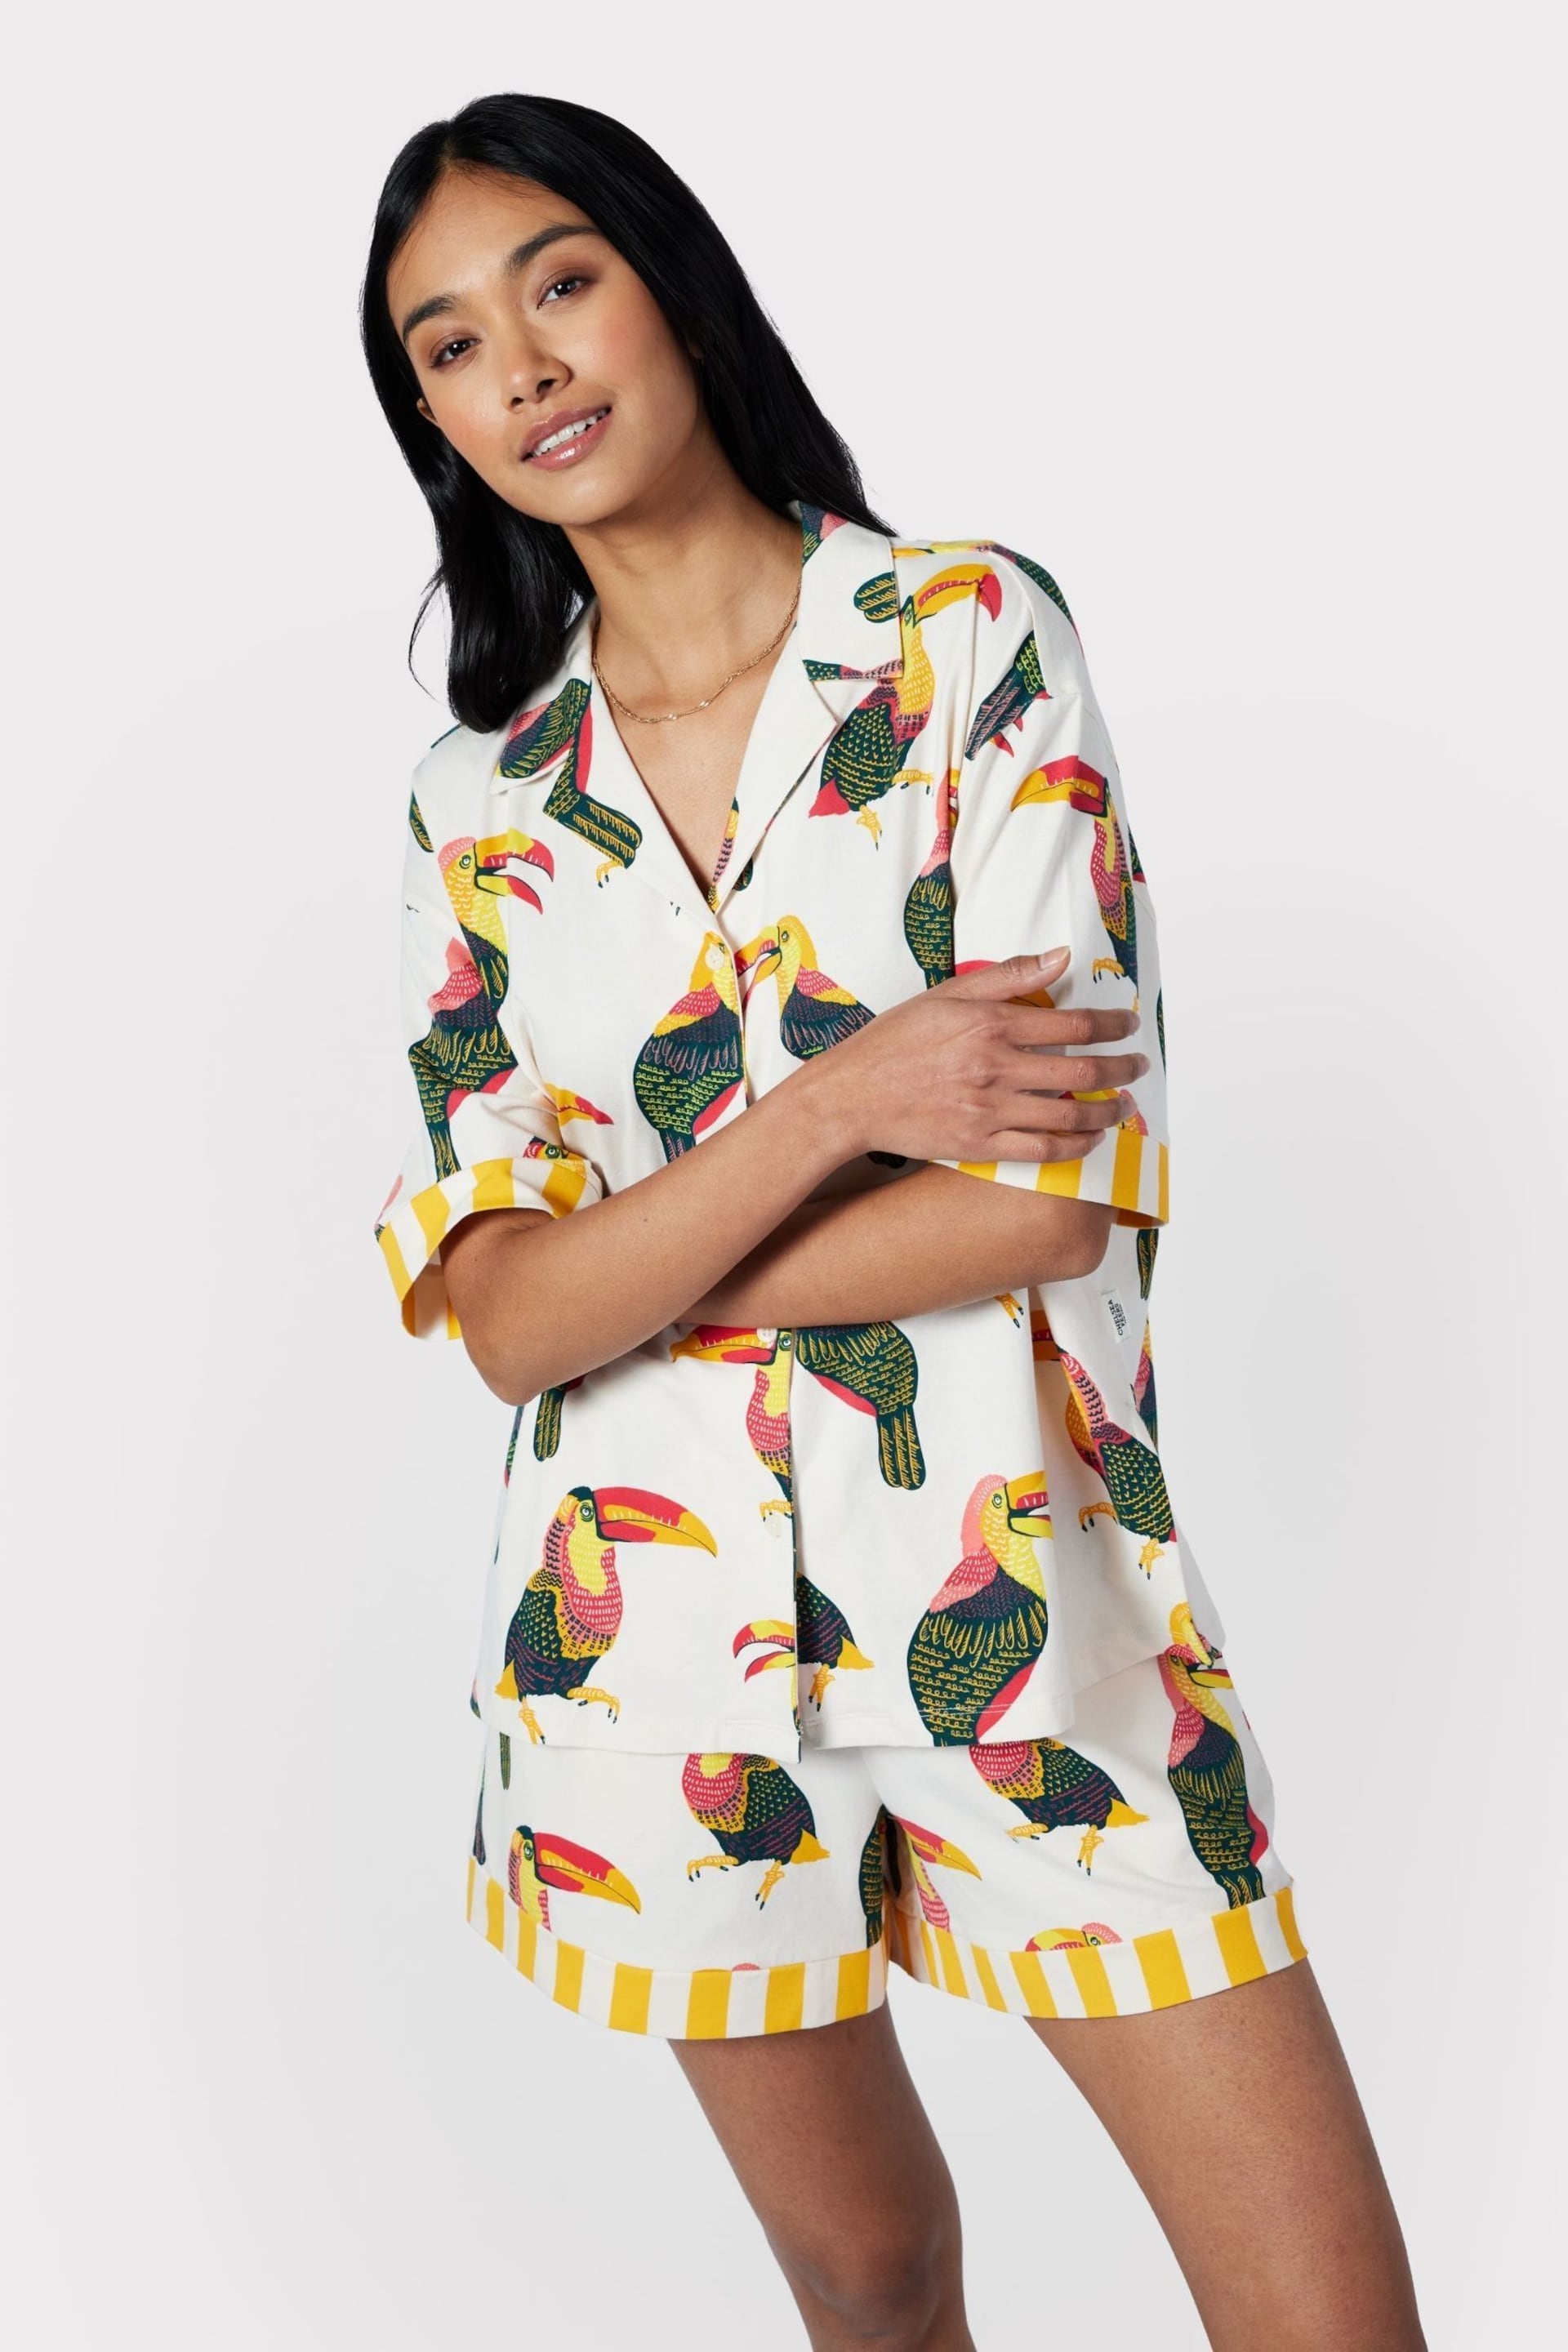 Chelsea Peers Cream Organic Cotton Toucan Print Button Up Short Pyjama Set - Image 2 of 5